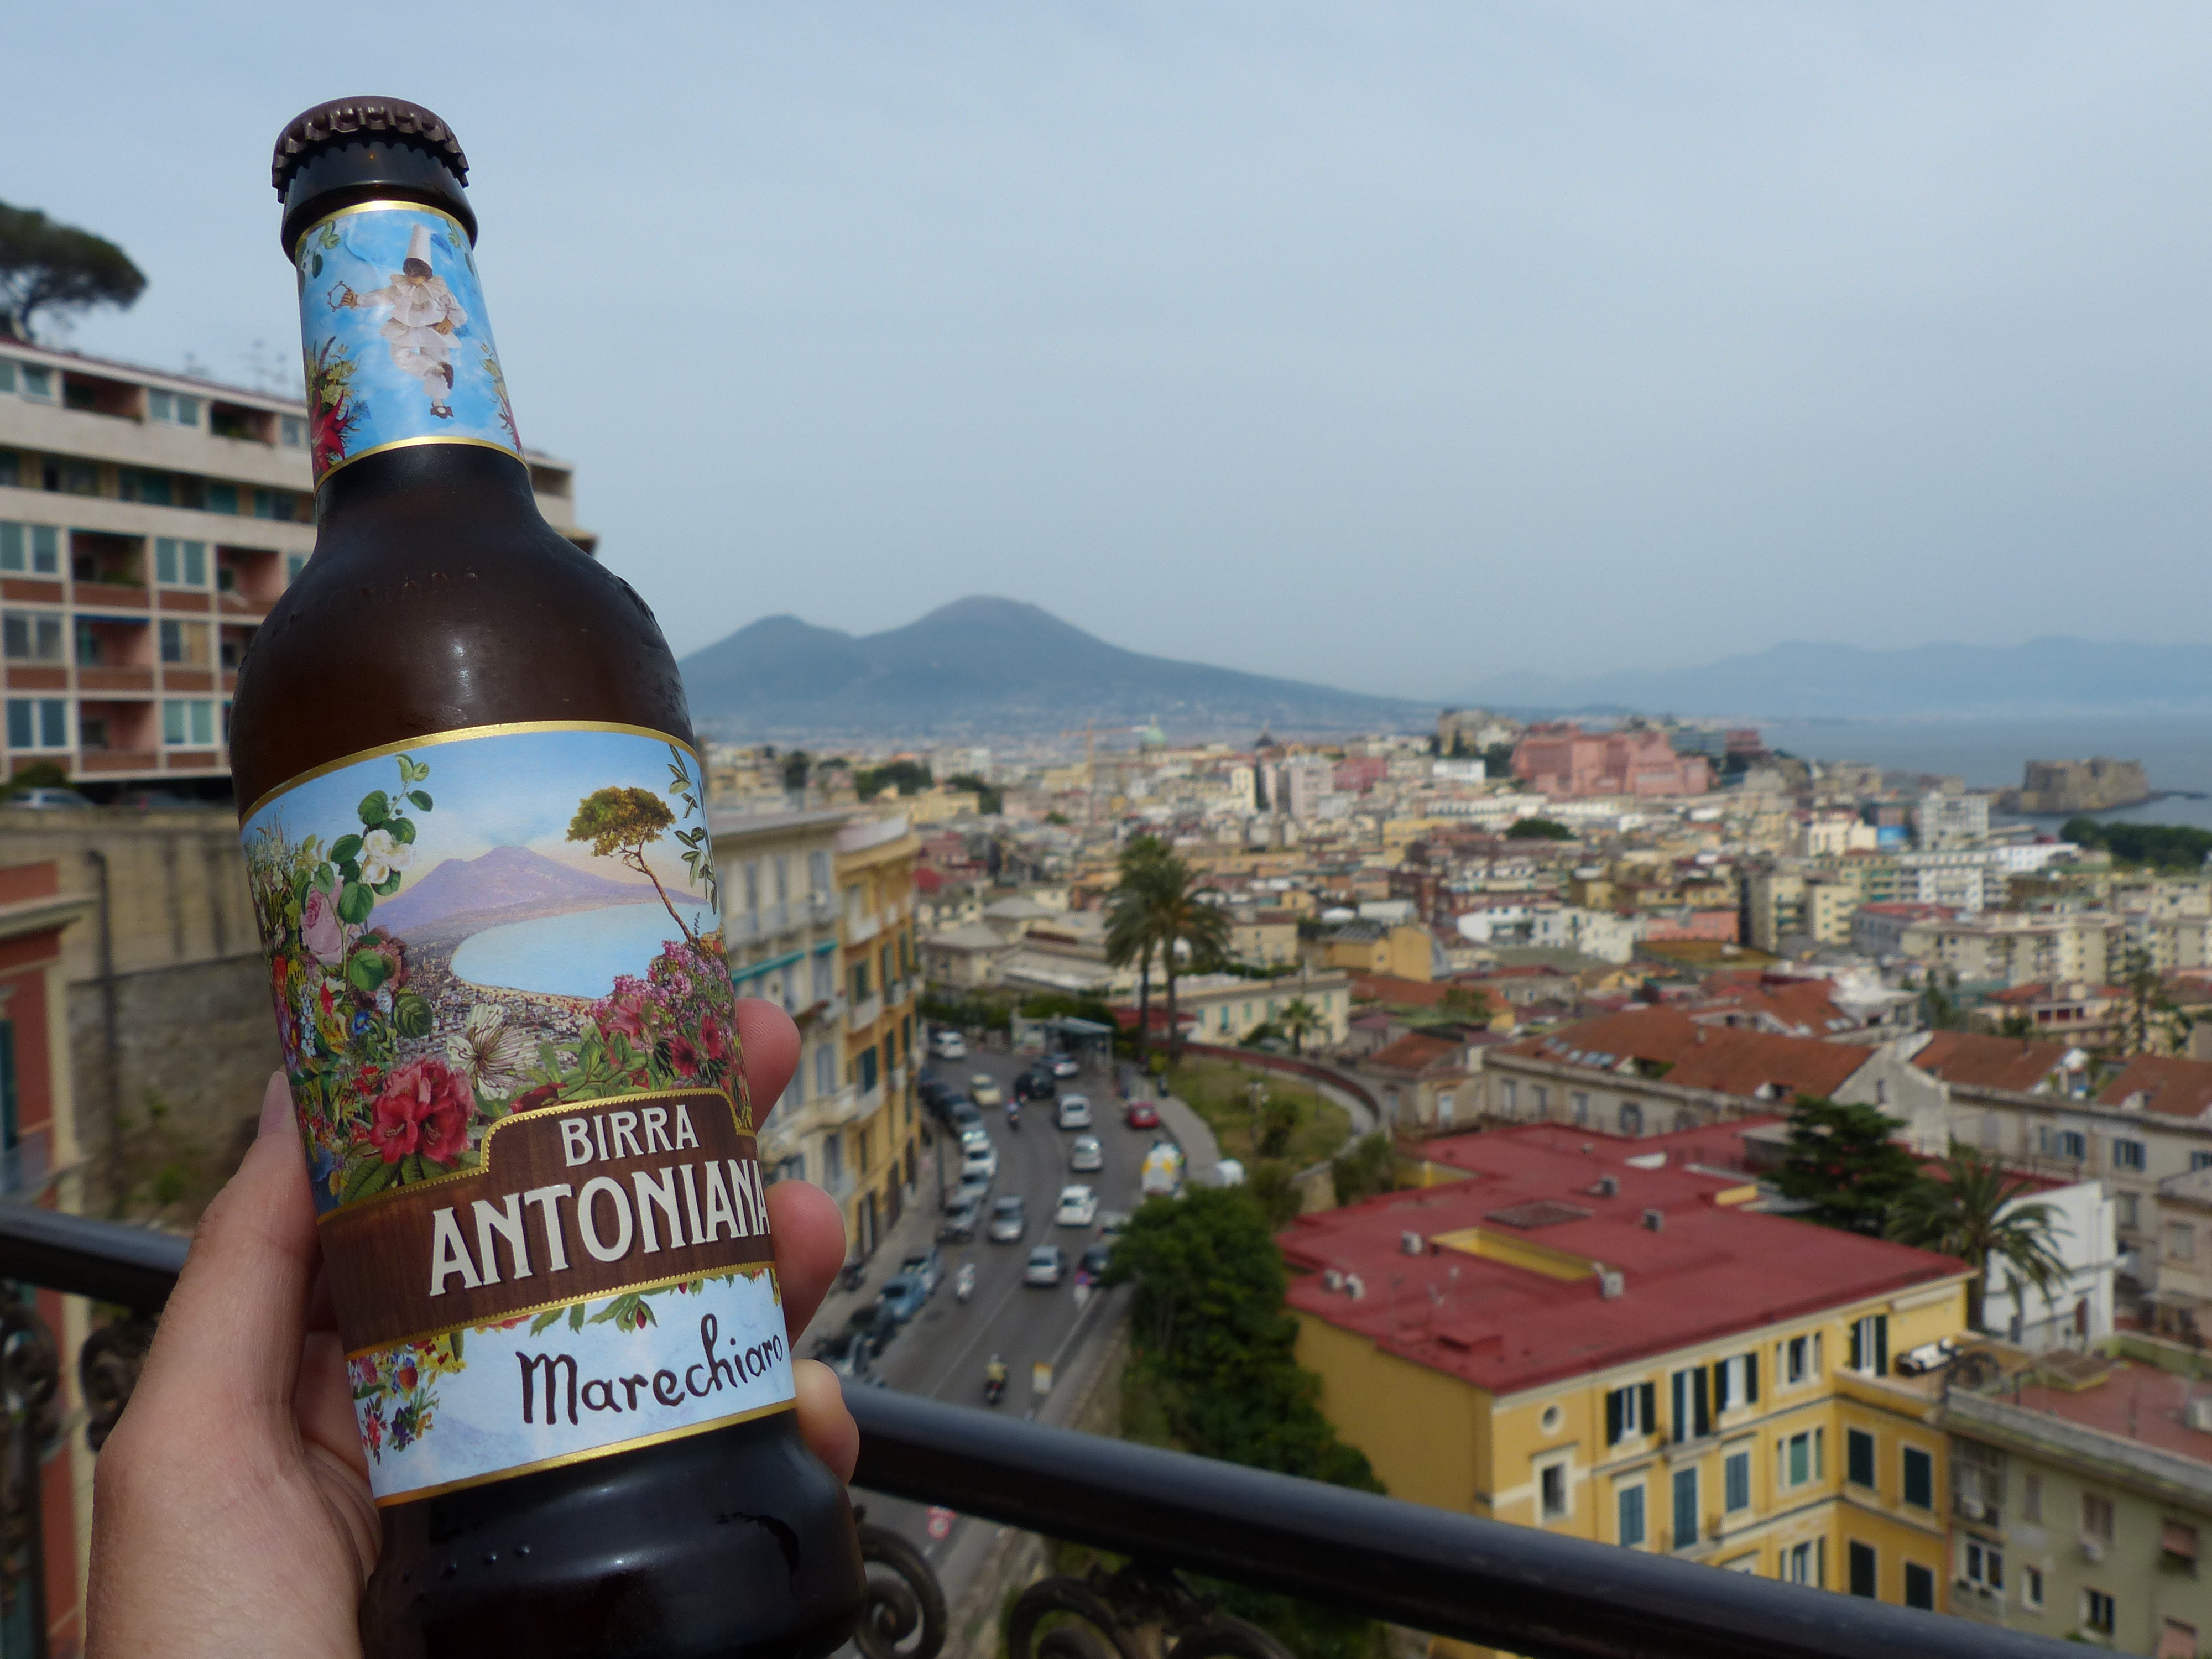  Marechiaro: la nuova birra firmata Birra Antoniana dedicata a Napoli